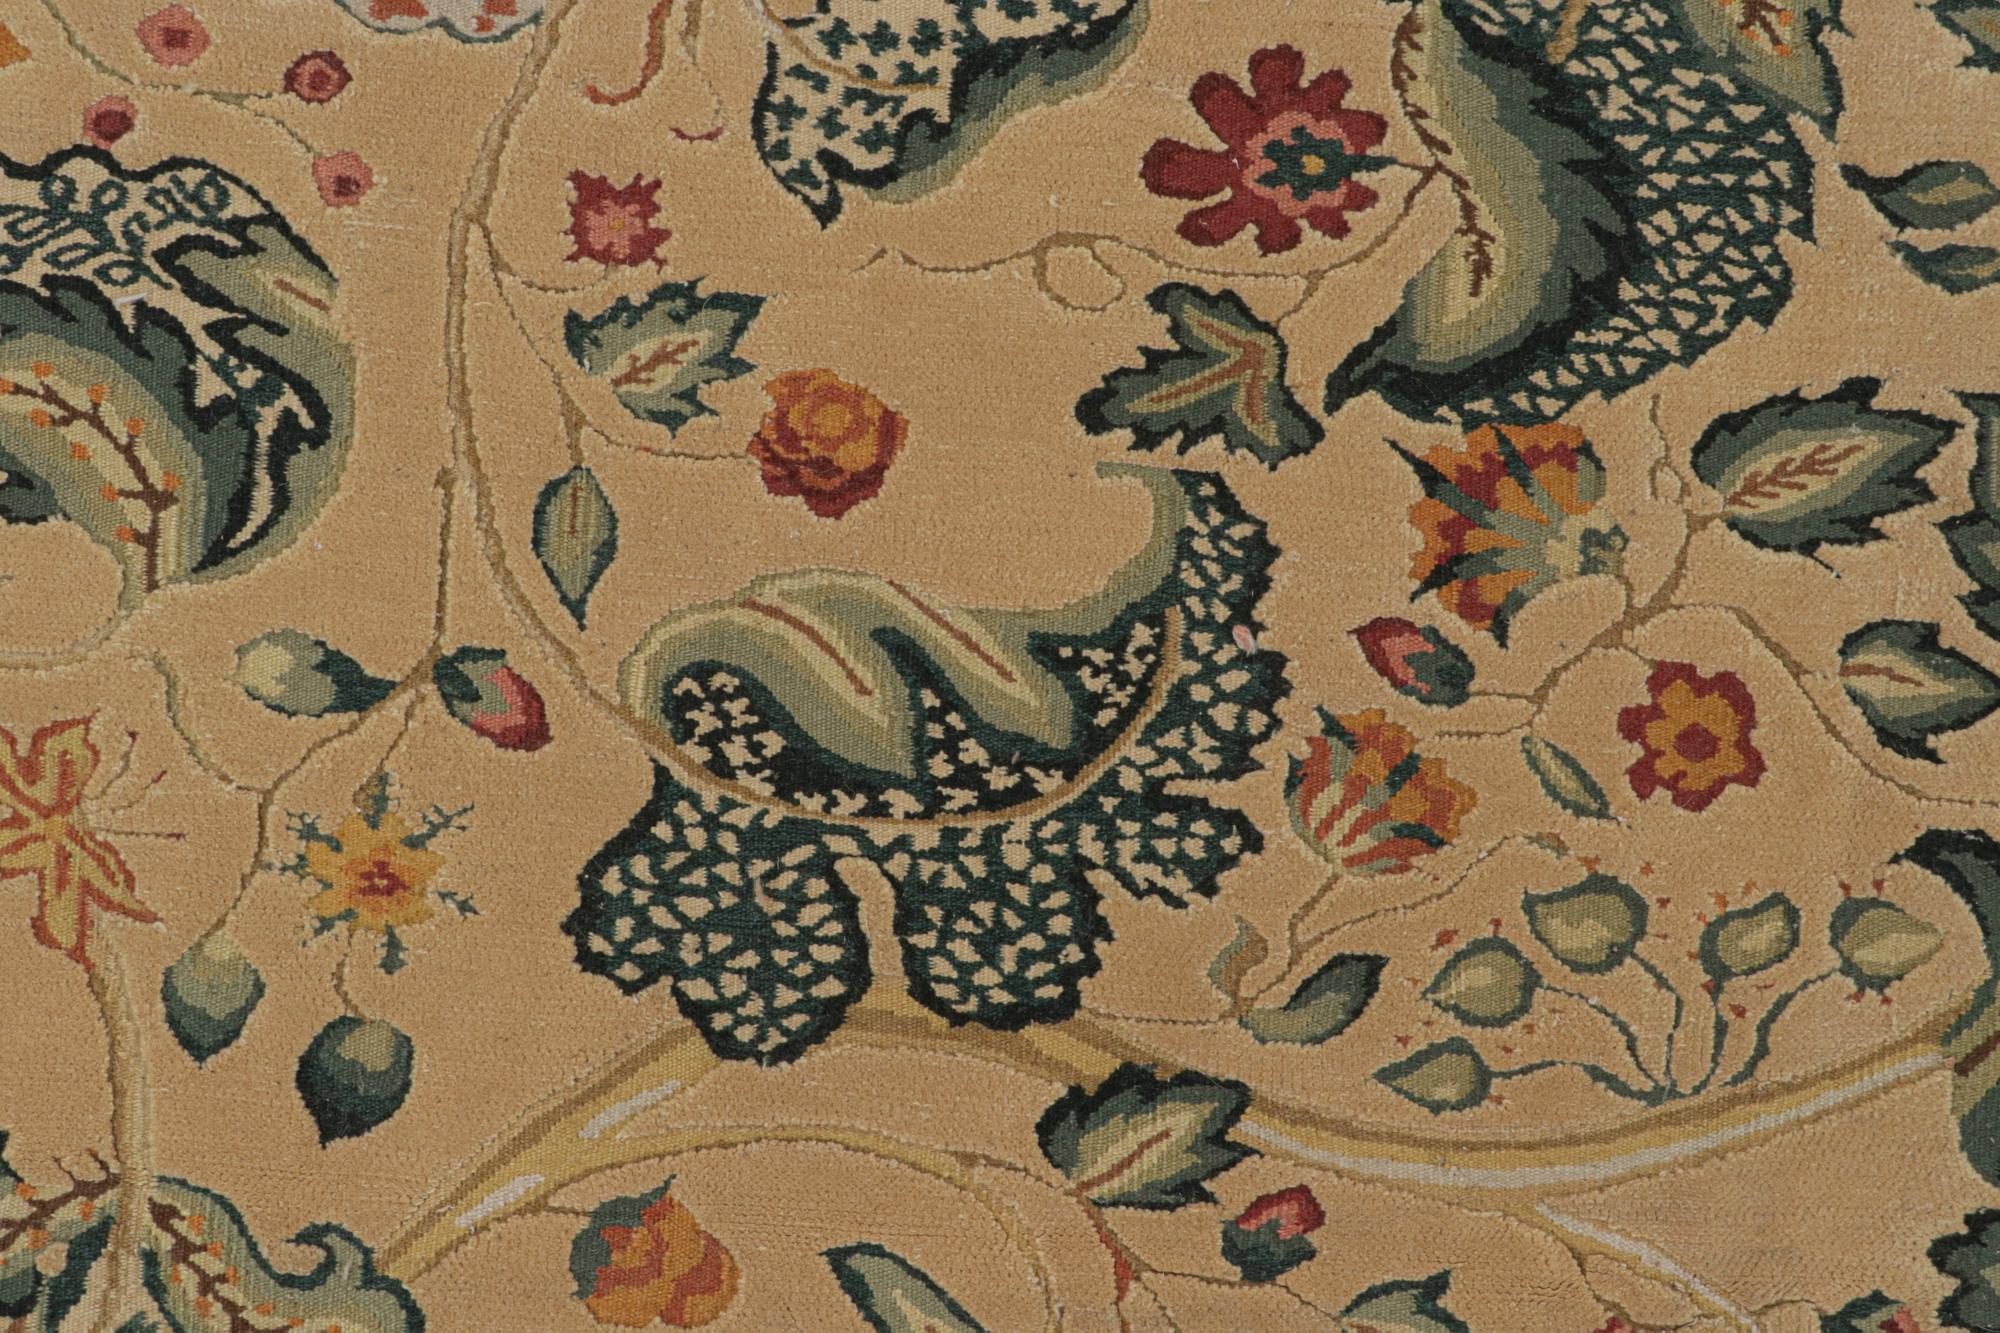 Wool Rug & Kilim’s European Tudor Style Flatweave in Beige with Teal Floral Pattern For Sale